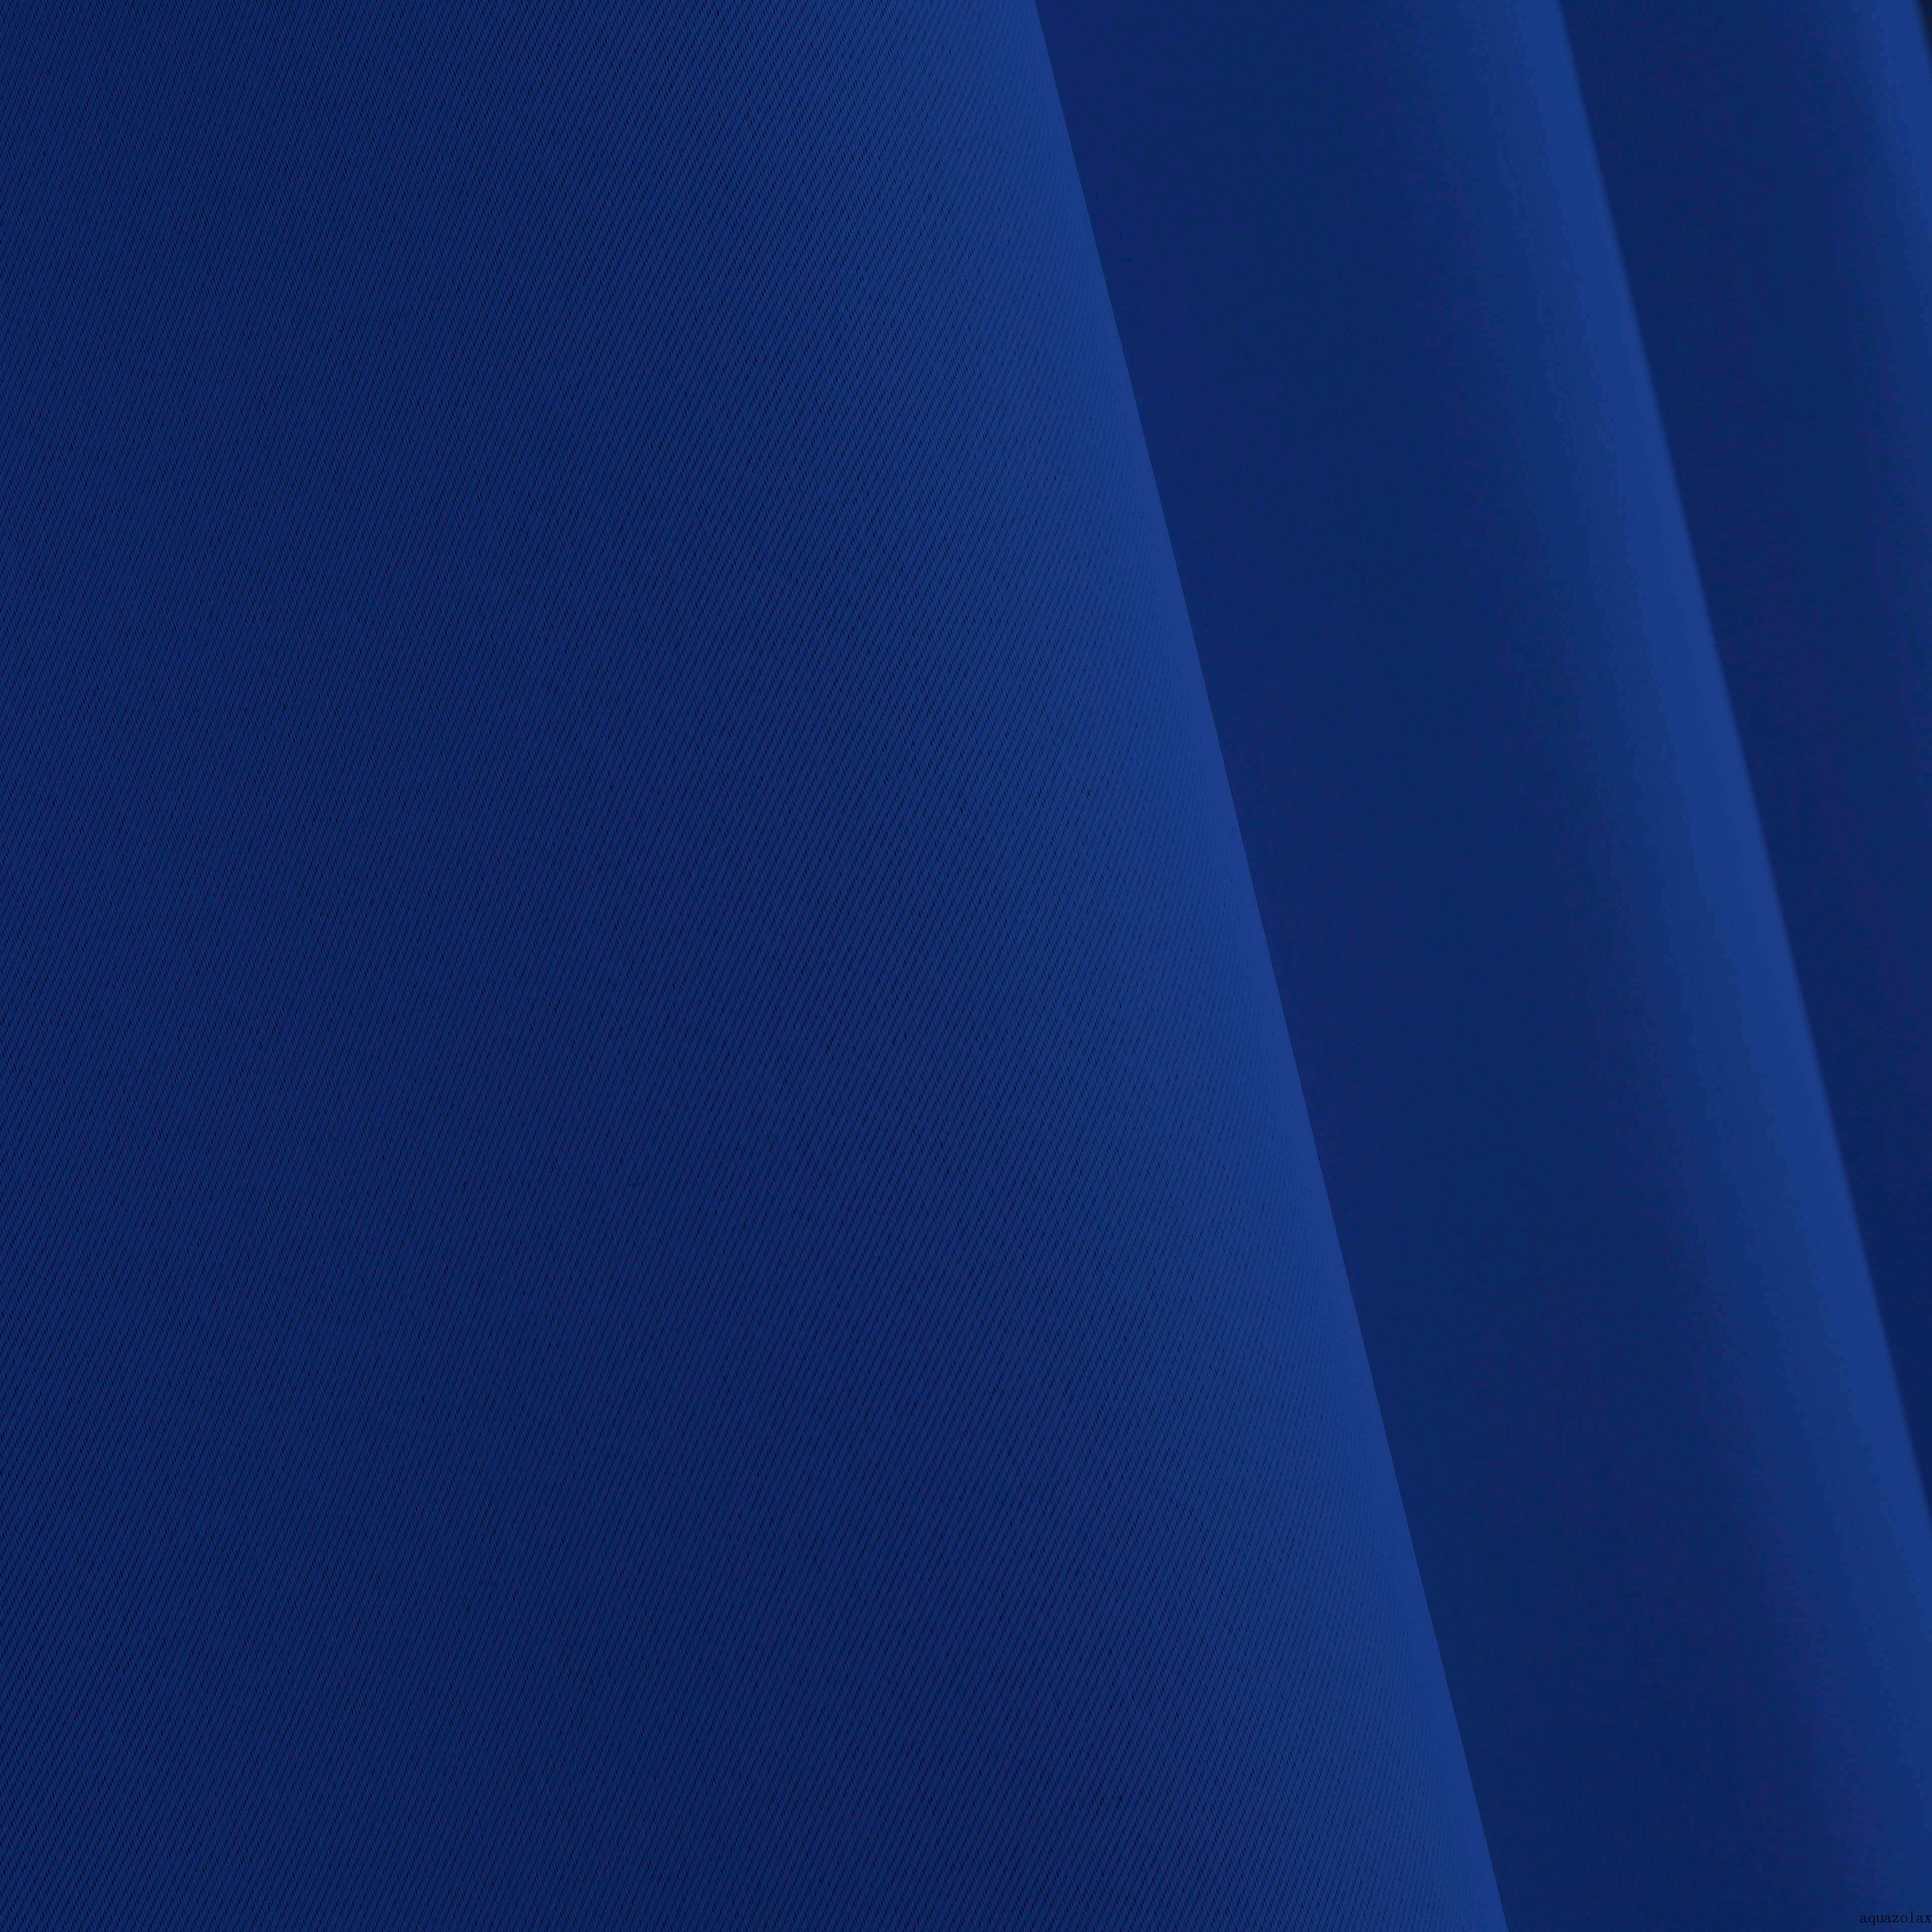 Aquazolax Blackout Curtains, 52"x84", Royal Blue, 2 Panels - aquazolax